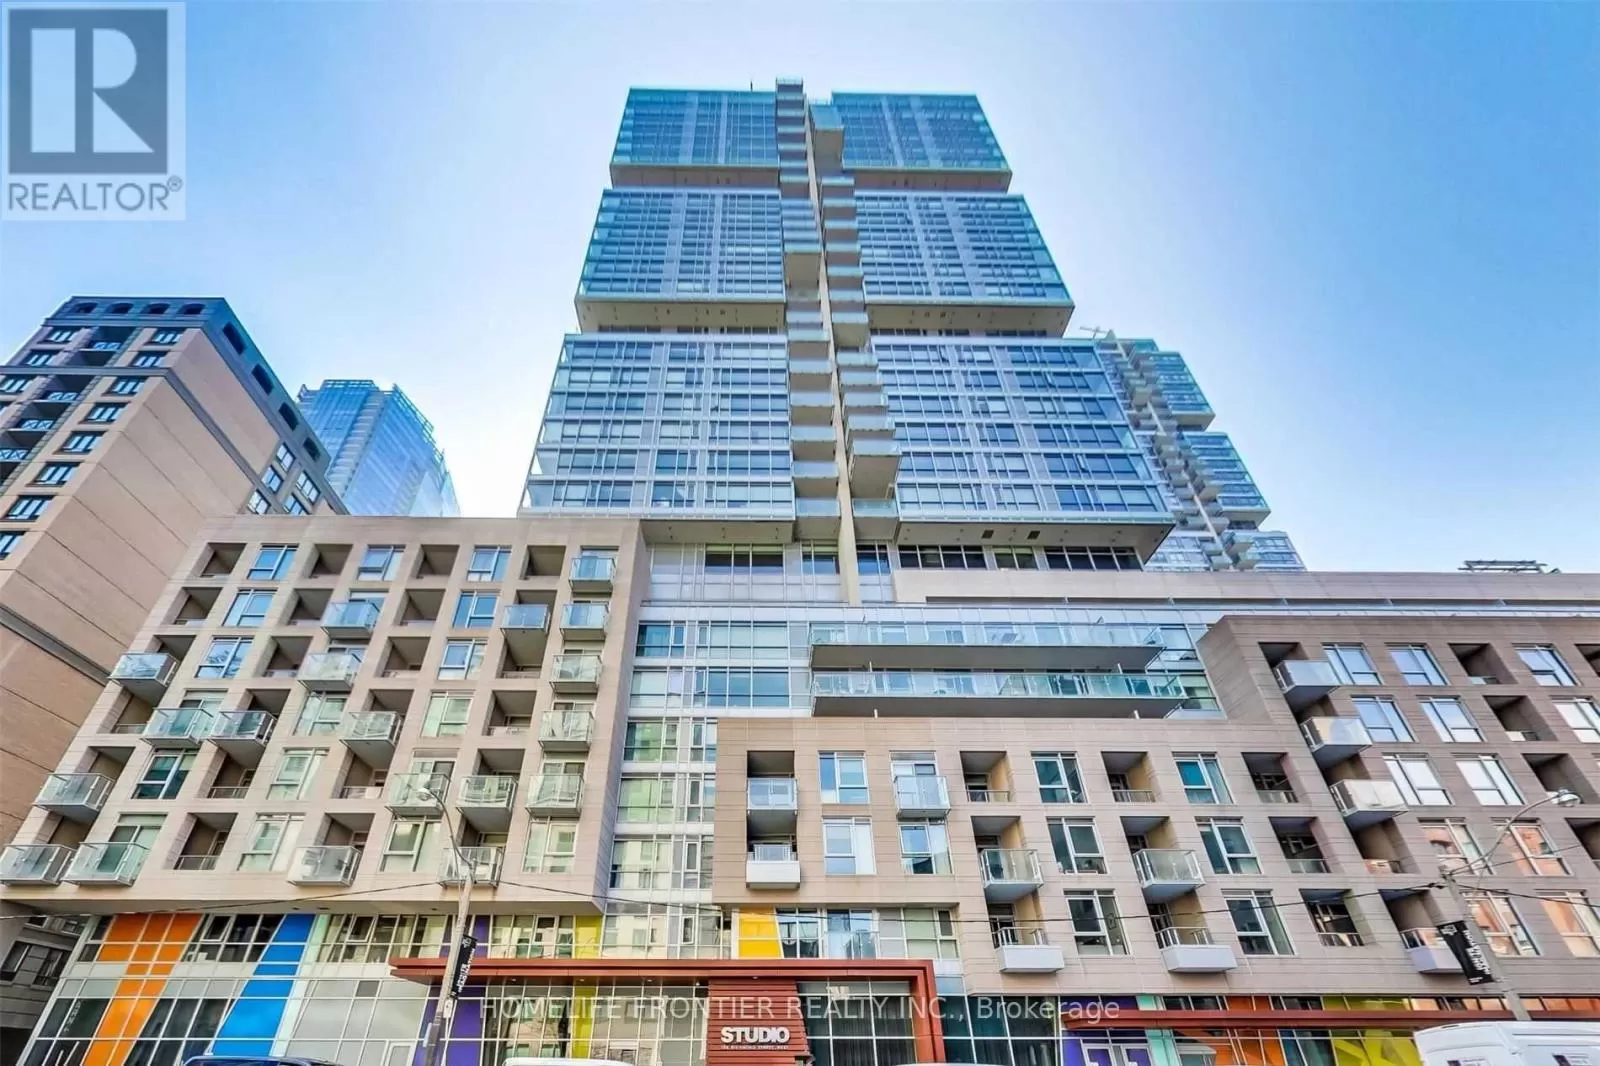 Apartment for rent: 309 - 199 Richmond Street W, Toronto, Ontario M5V 0H4